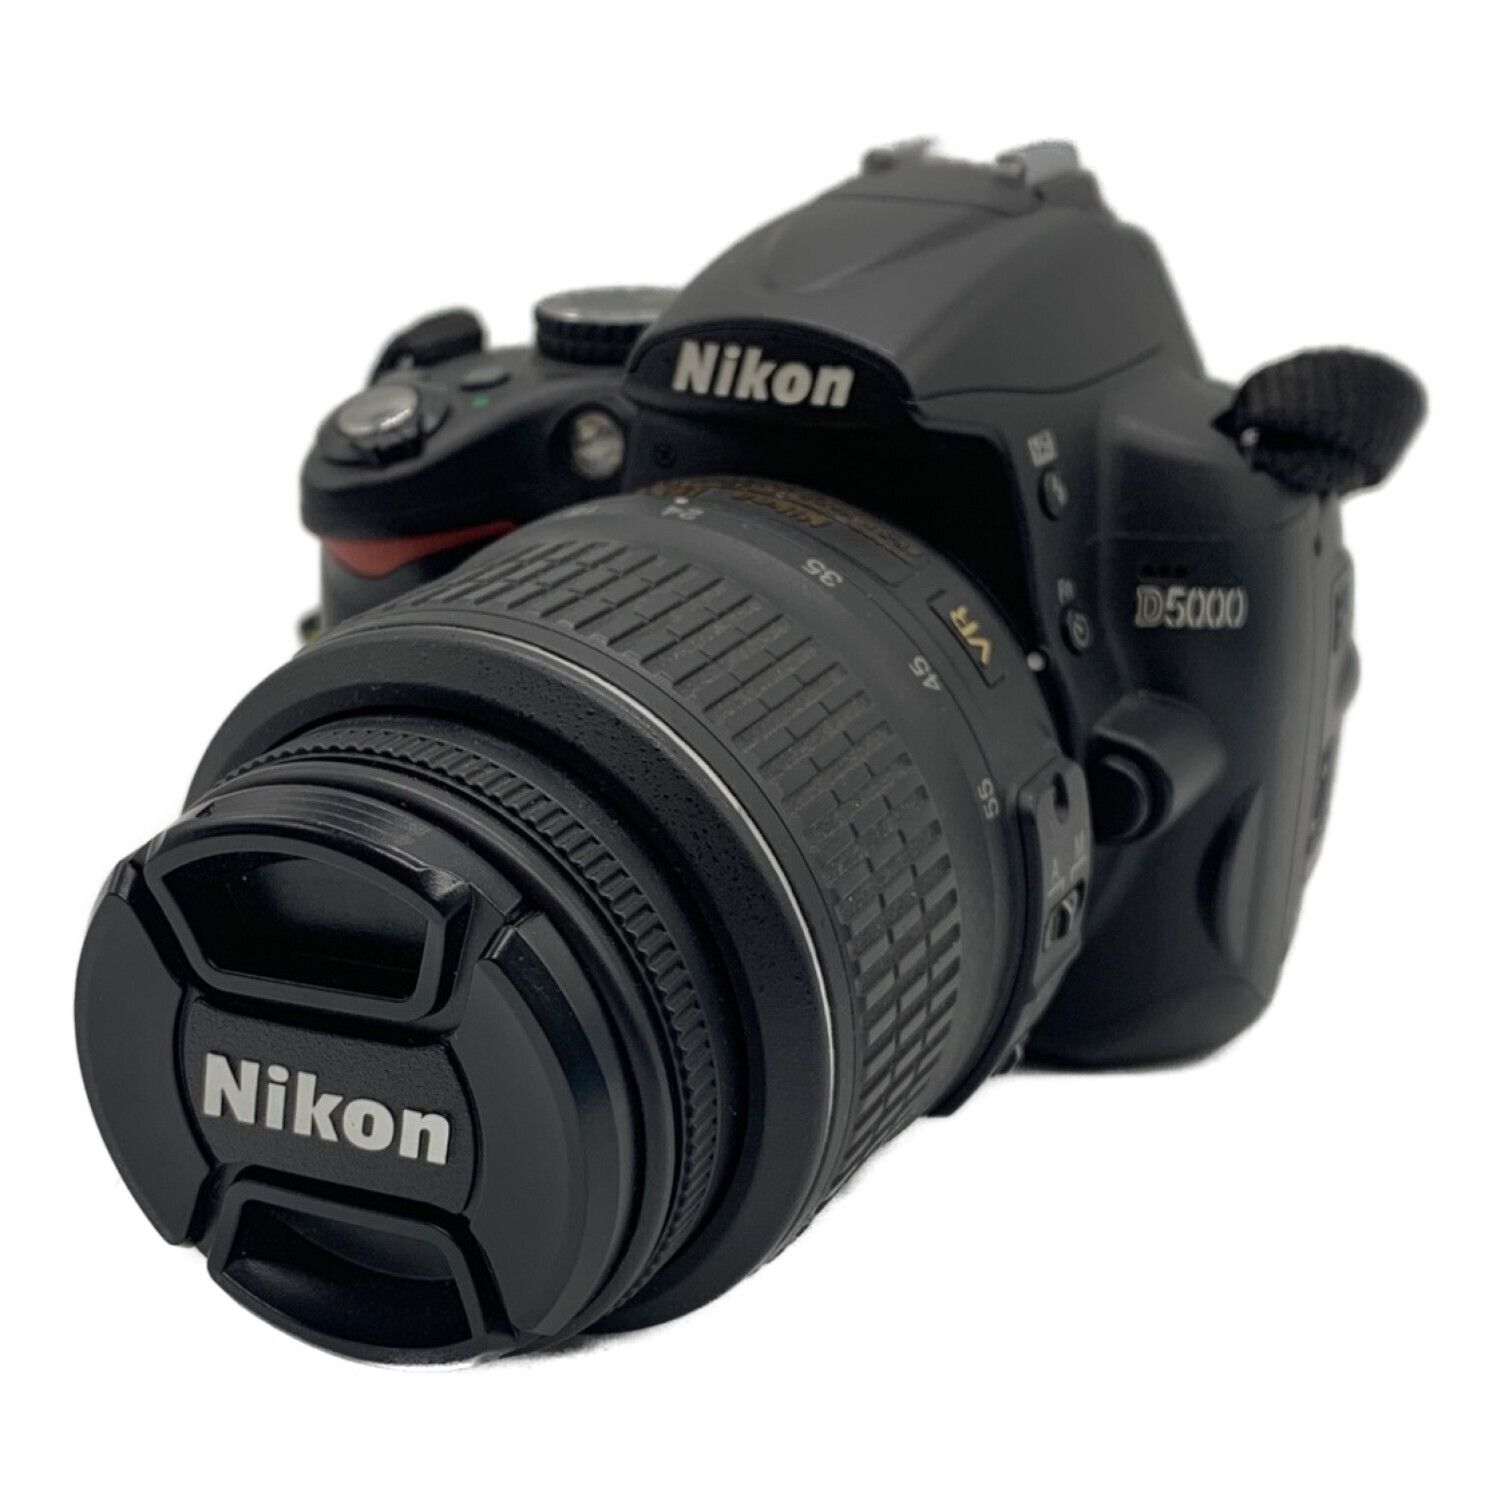 Nikon デジタル一眼レフカメラ D5000 ダブルズームキット D5000WZ - 4